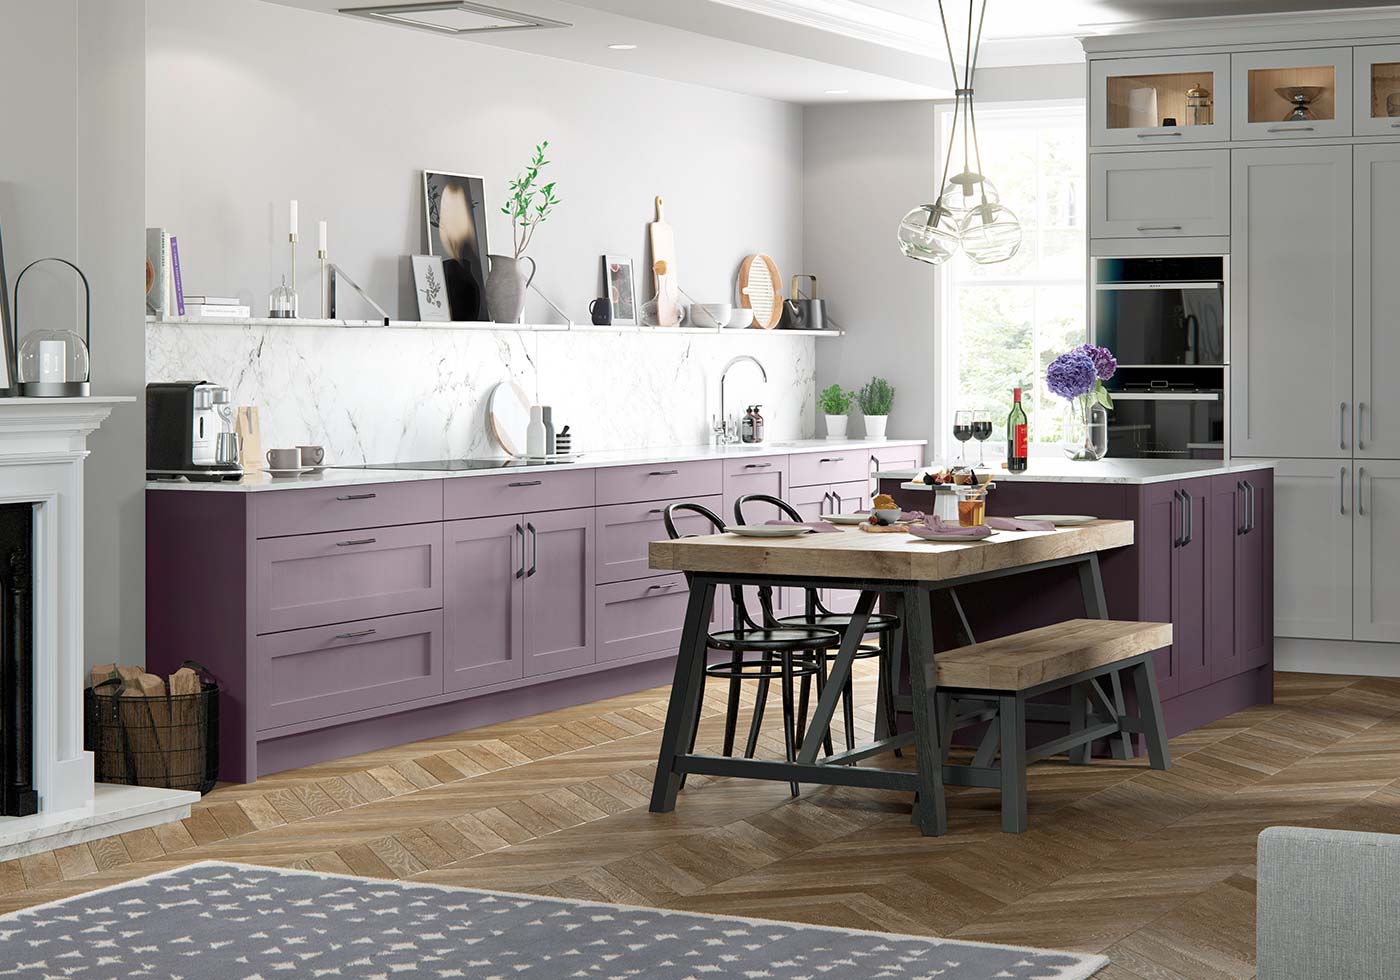 Unique Purple Kitchens Pictures for Large Space